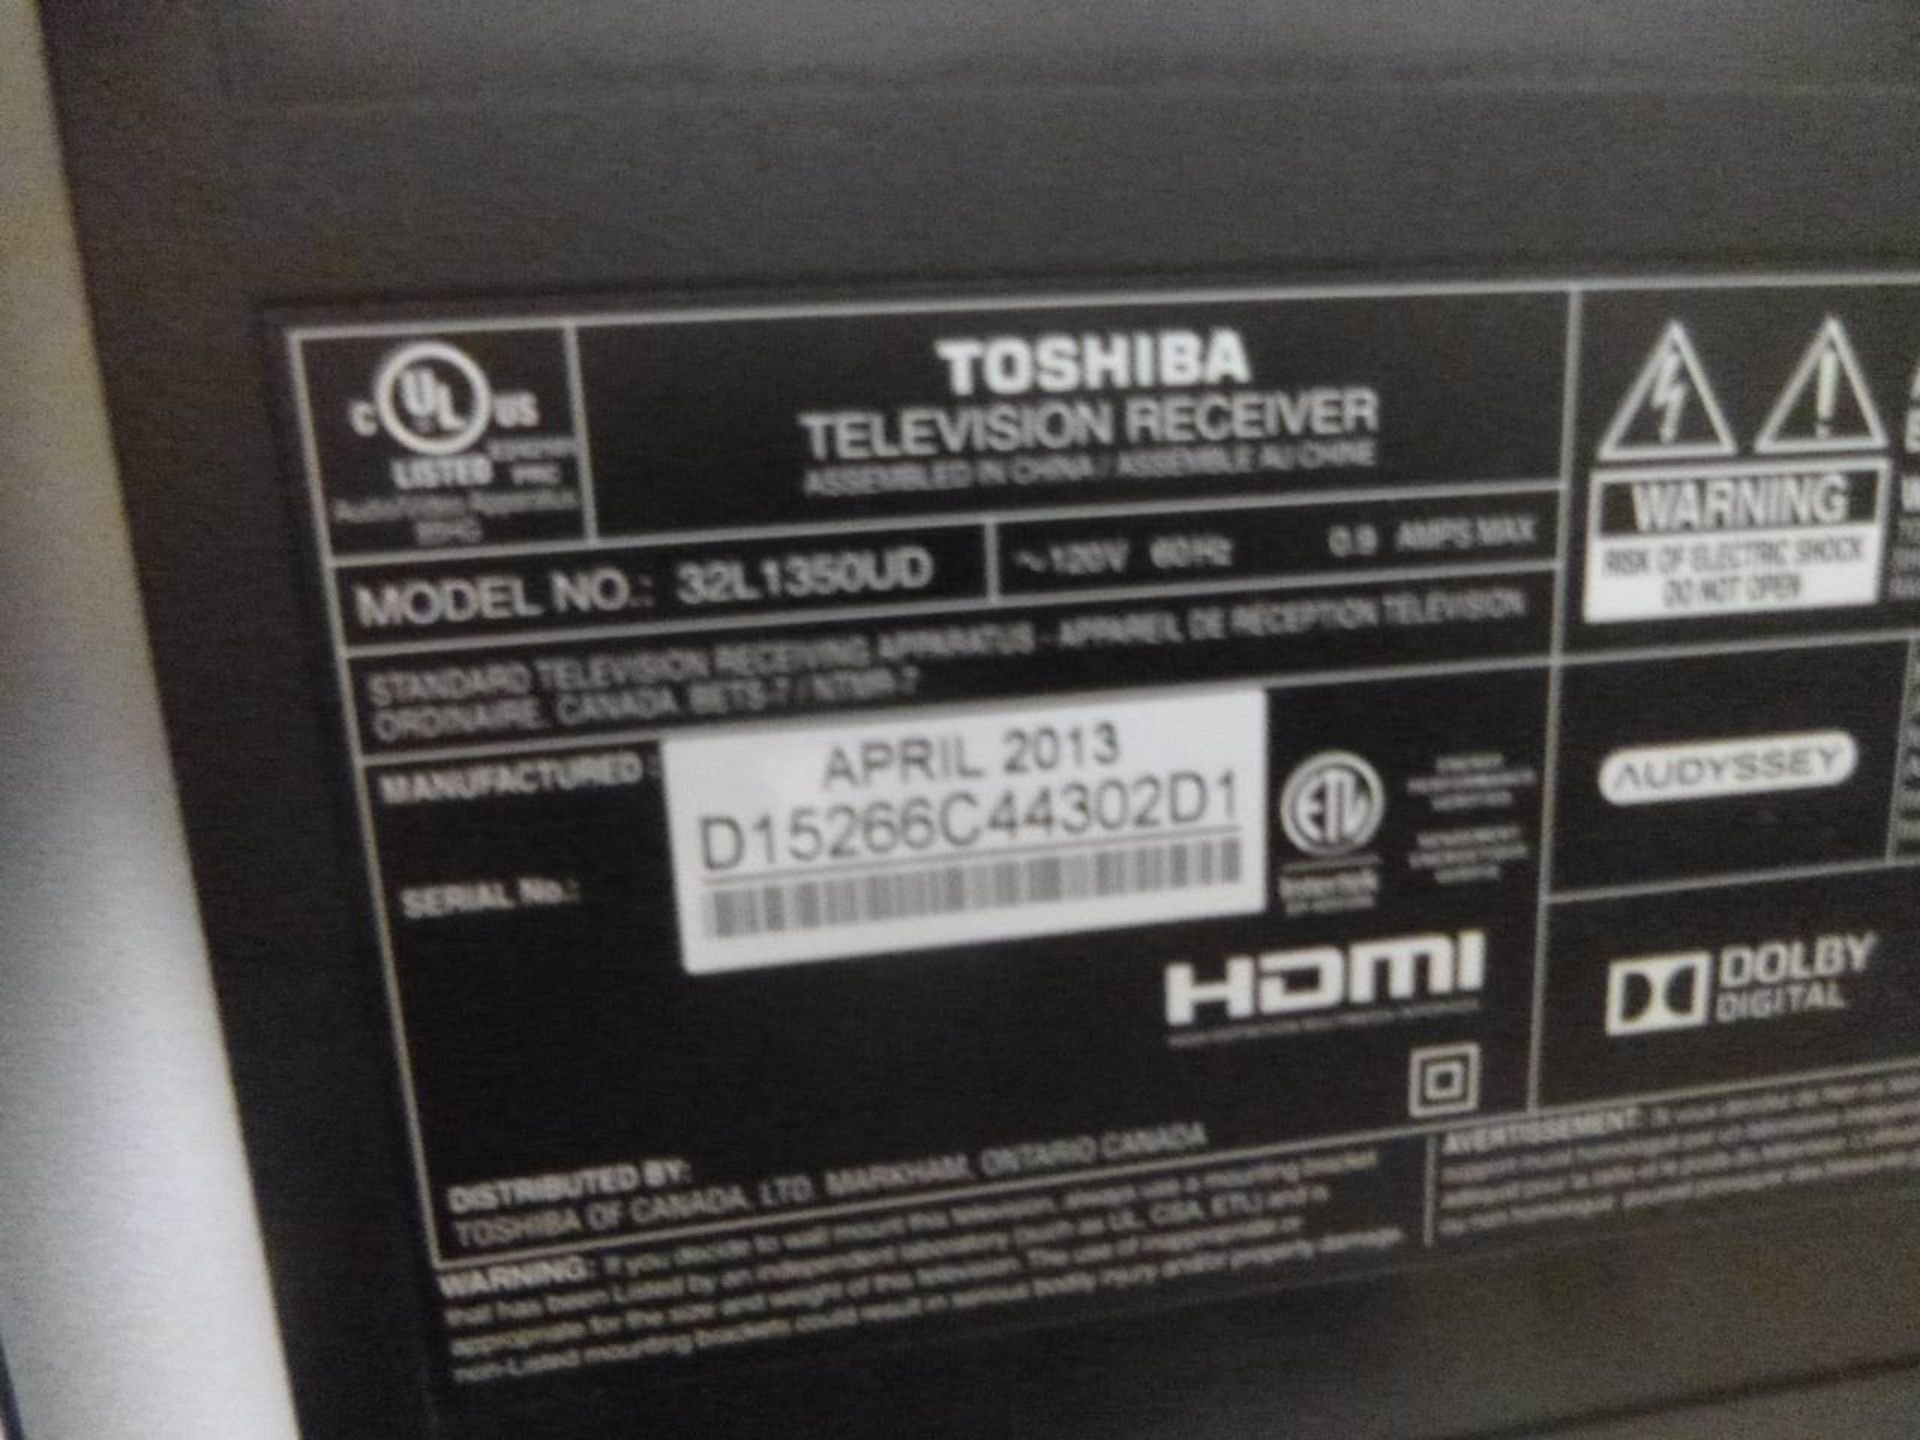 Toshiba 32L1350UD Flat screen TV - Image 2 of 3